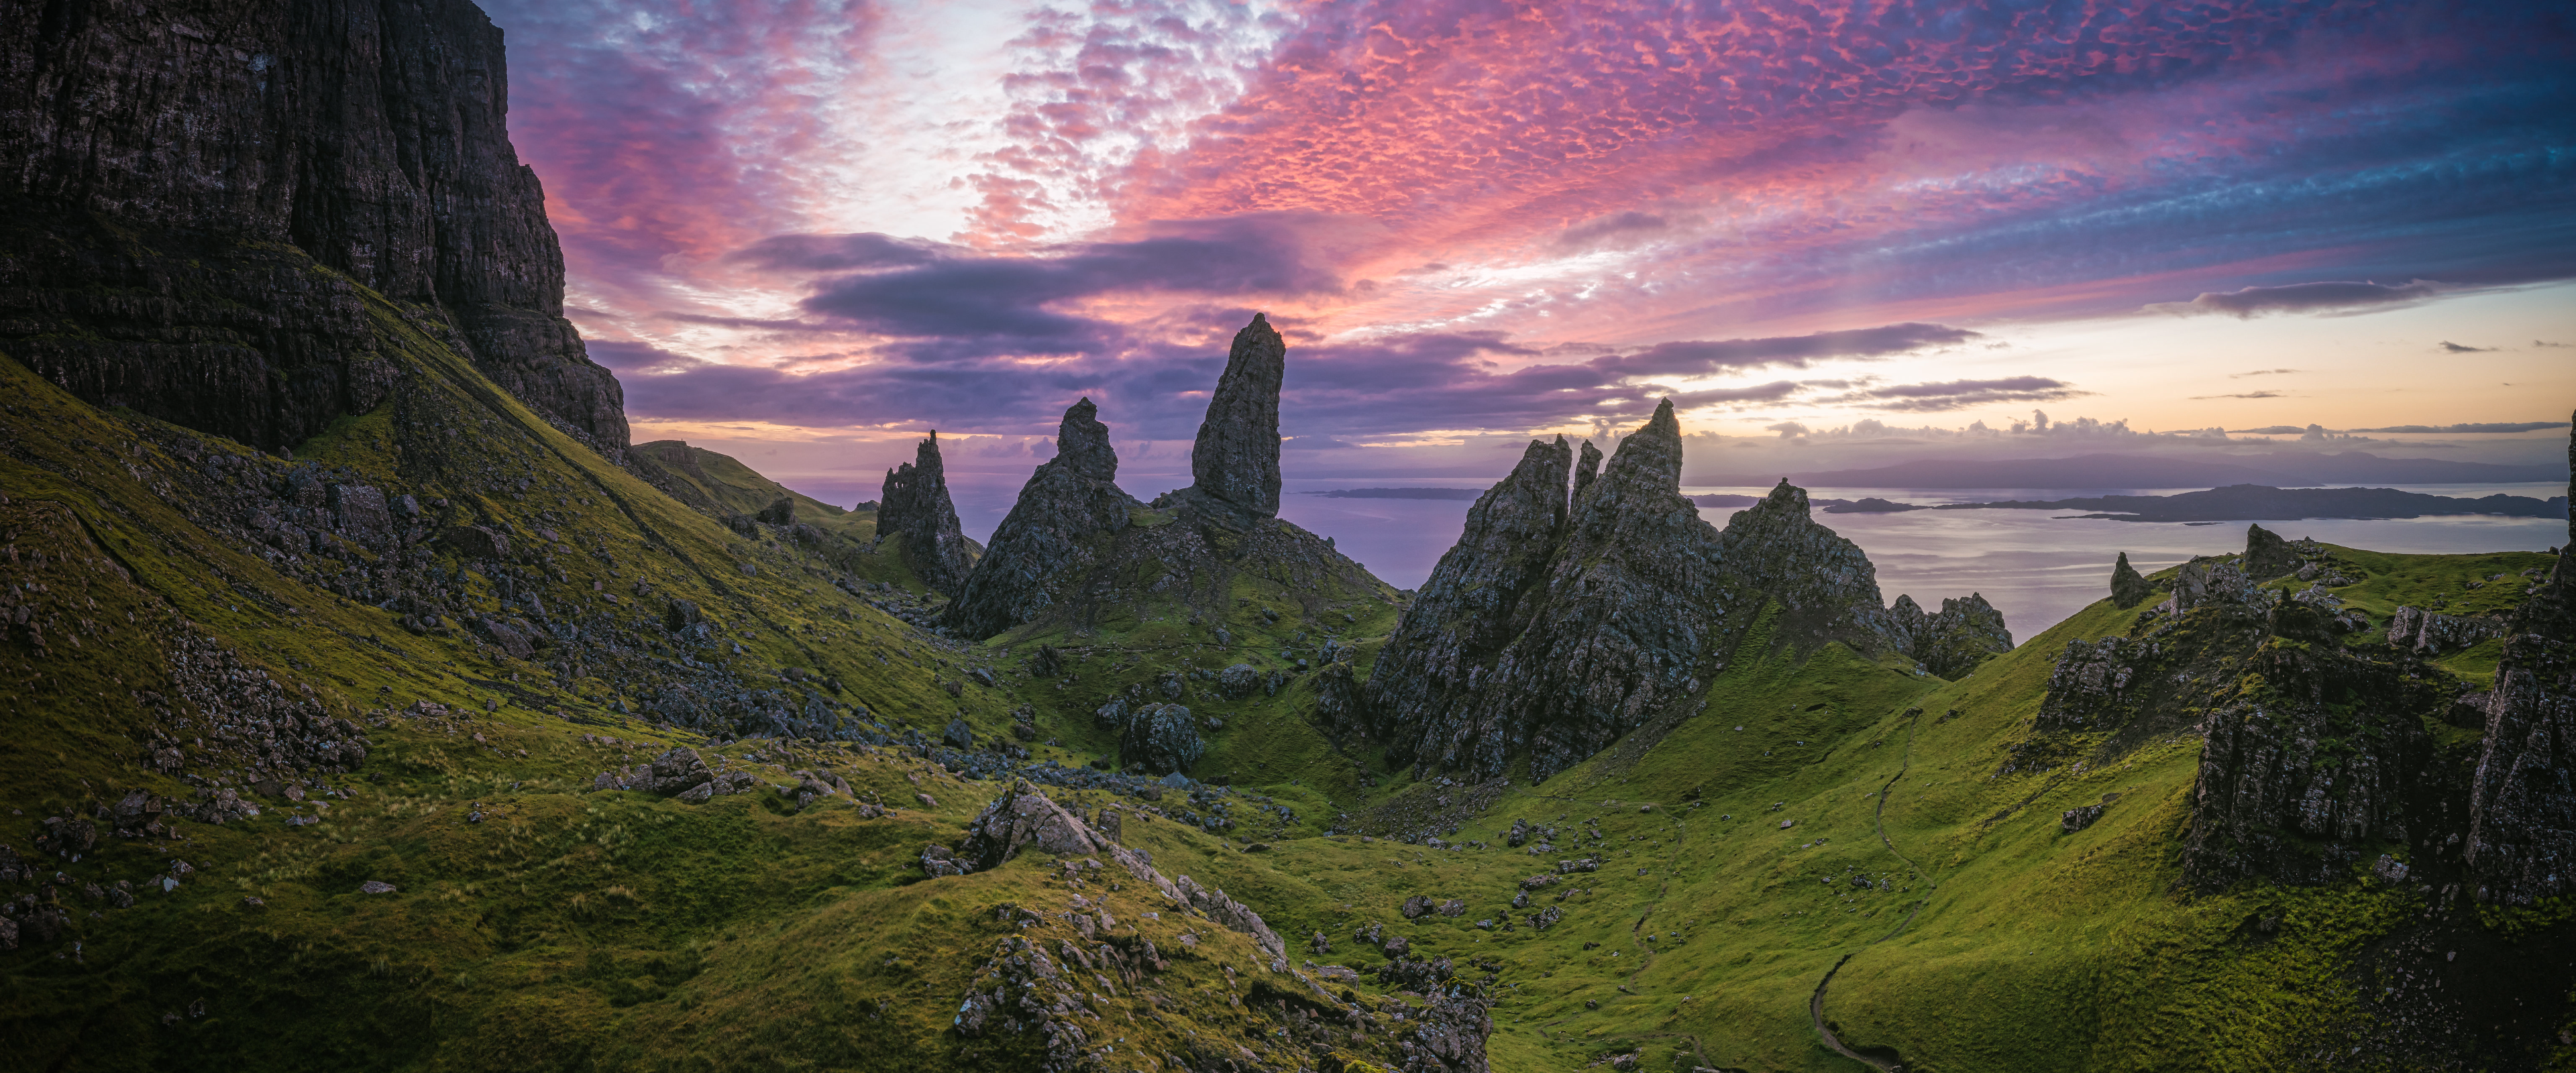 General 3840x1600 nature landscape mountains rocks clouds sky grass sunset The Storr Scotland